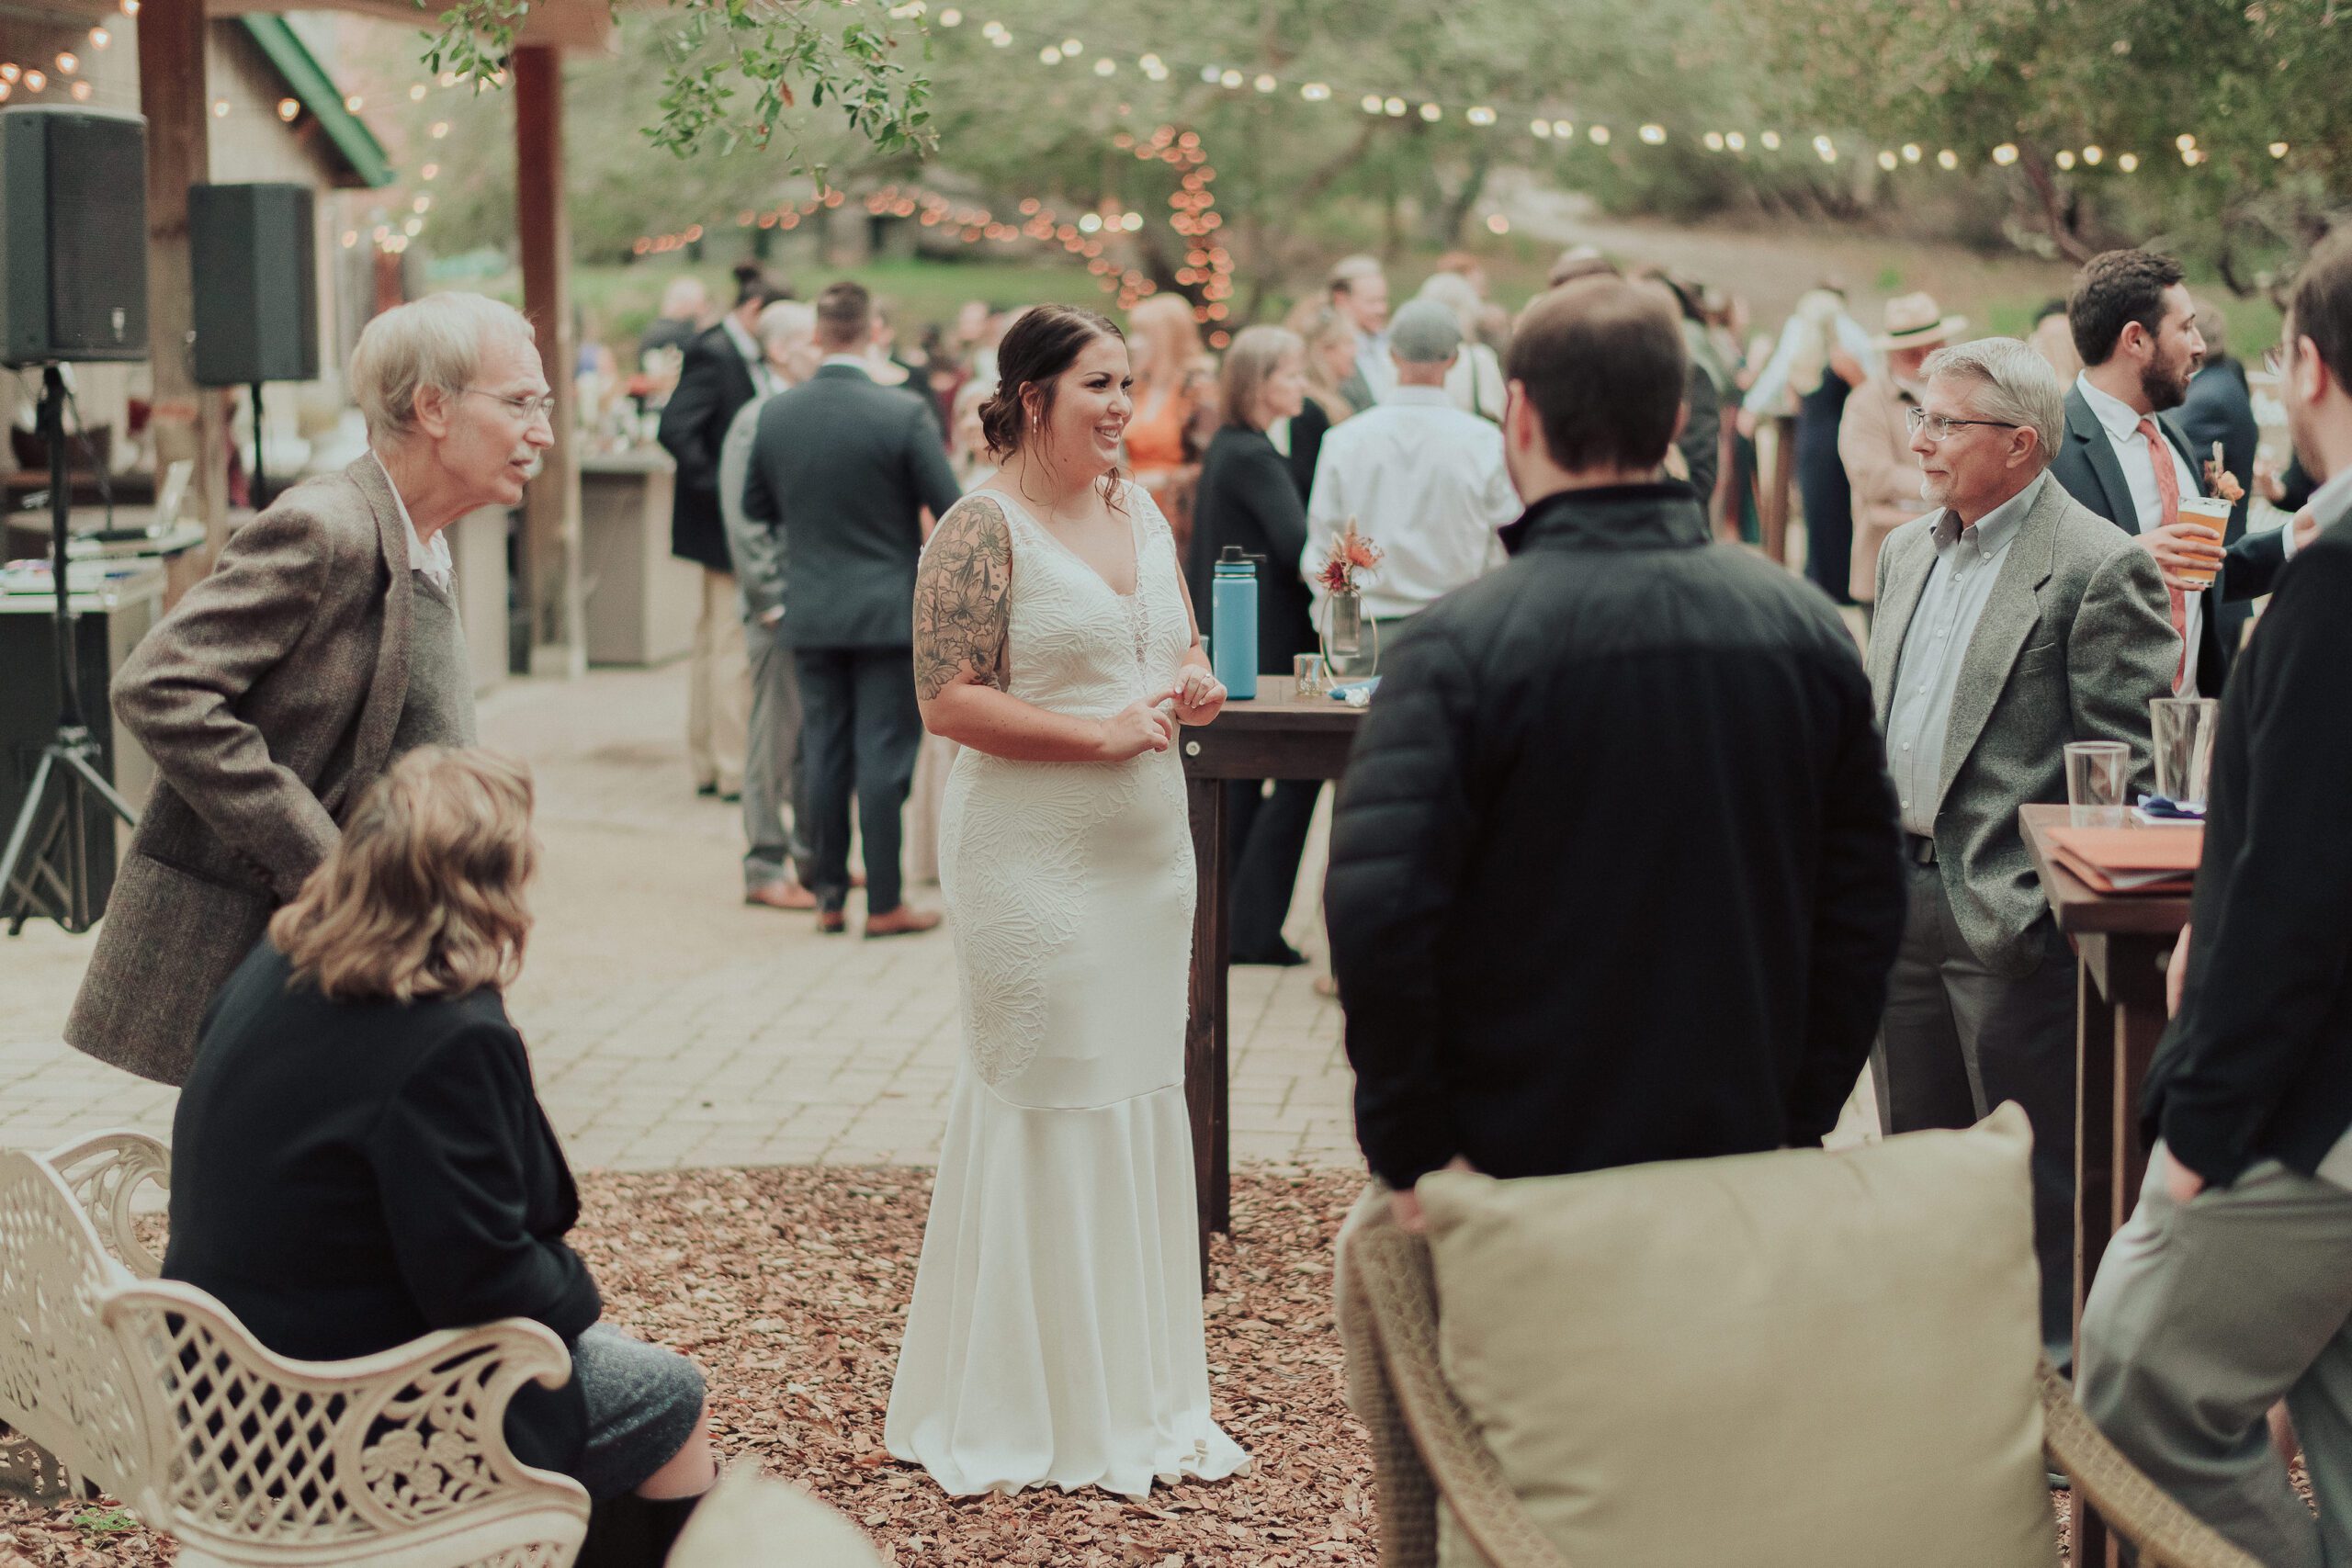 Wedding in San Luis Obispo, San Luis Obispo Wedding Photographer, James Lester Photography